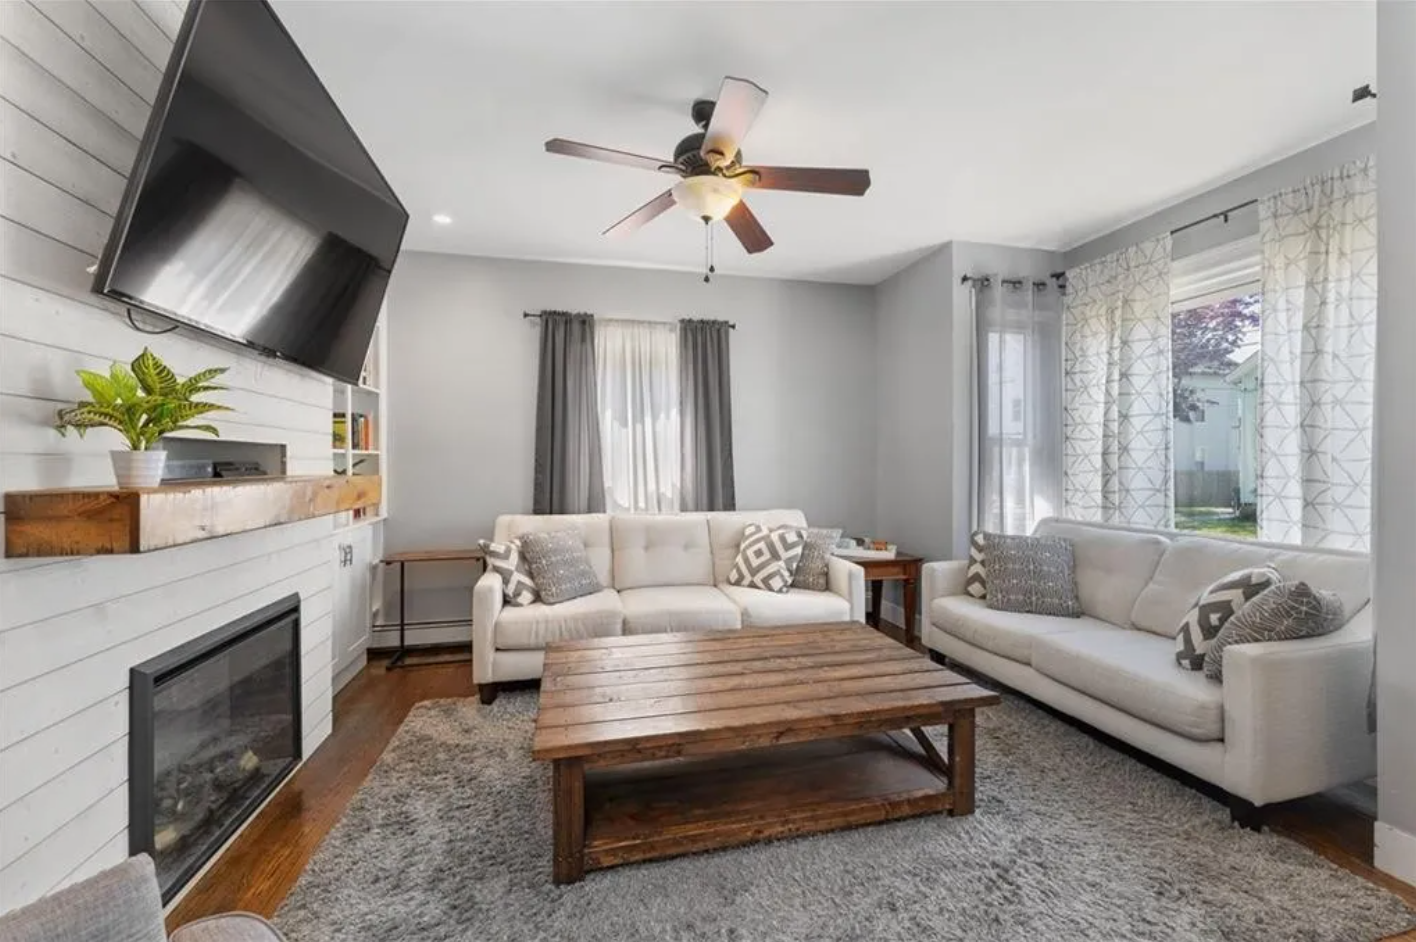 Living room with light gray walls, single-hung windows, hardwood floors, and fireplace.